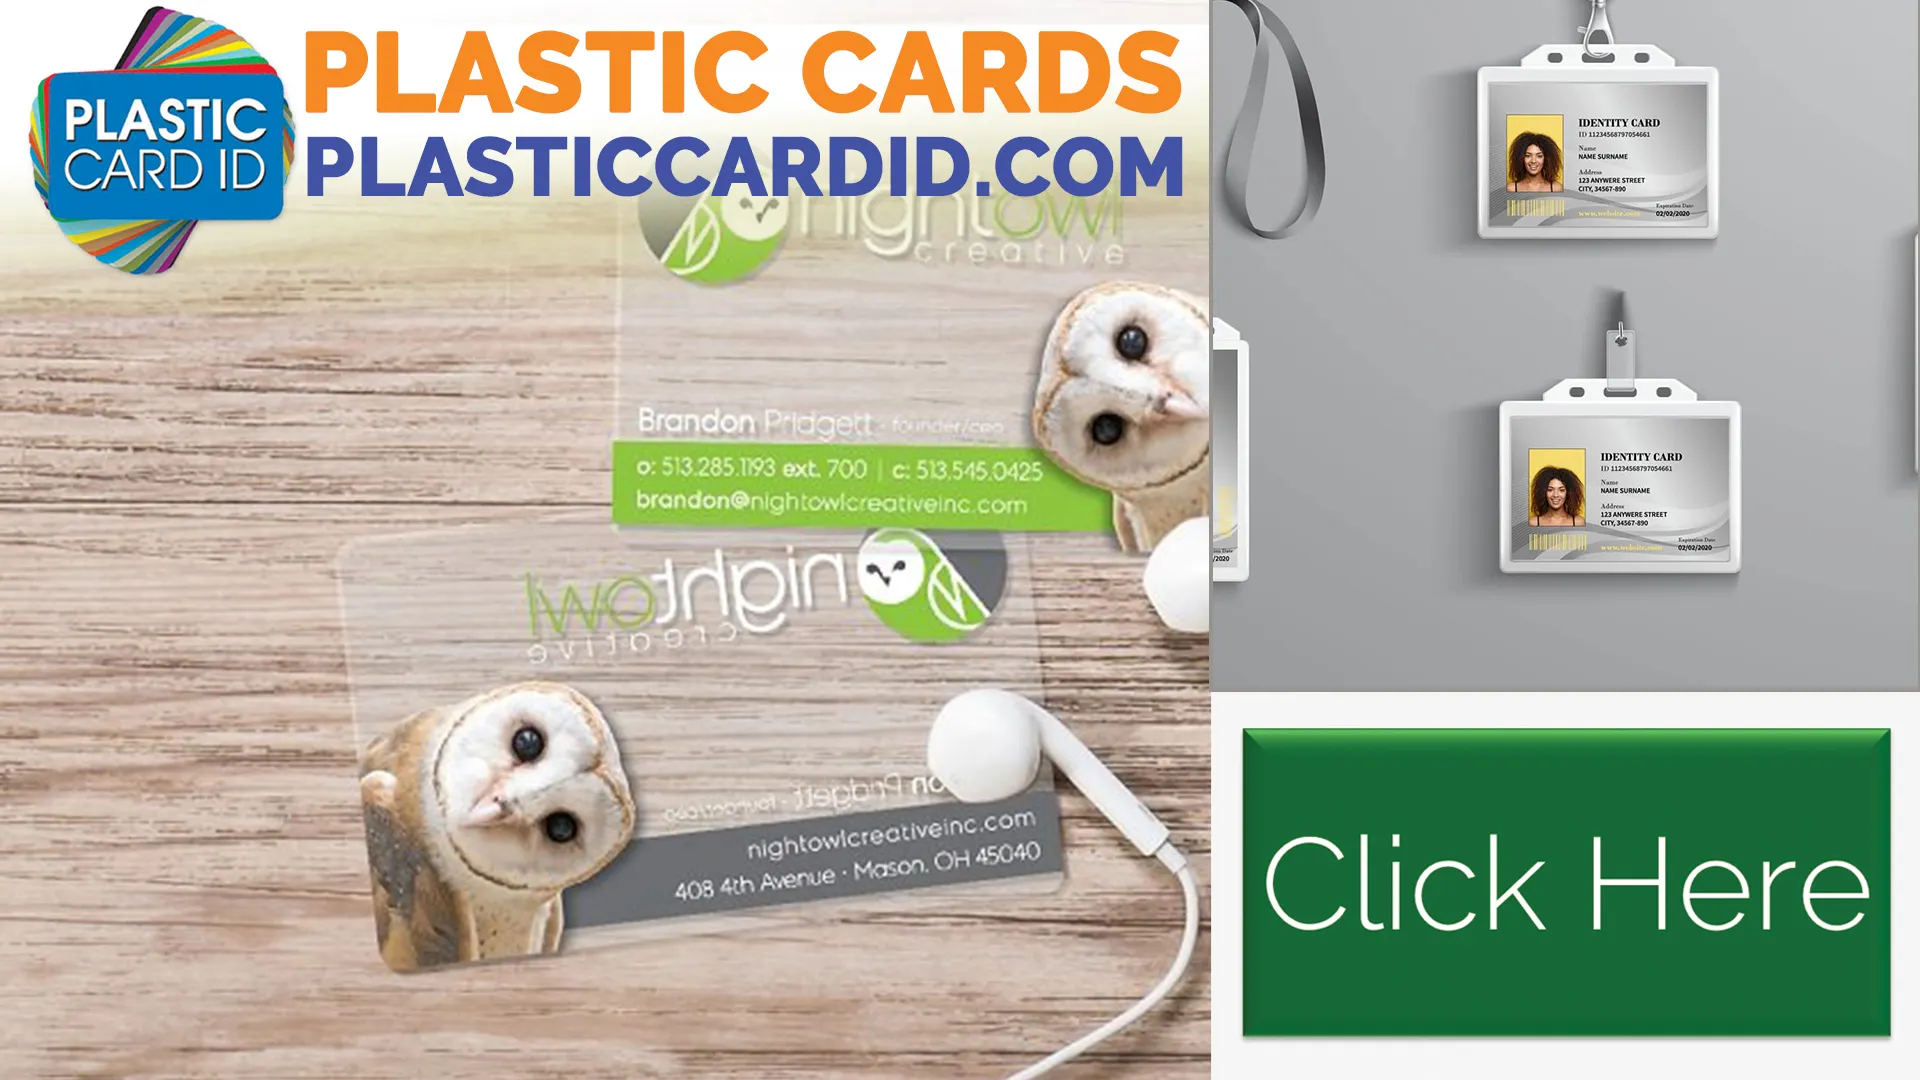 Branding in Plastic Card Design